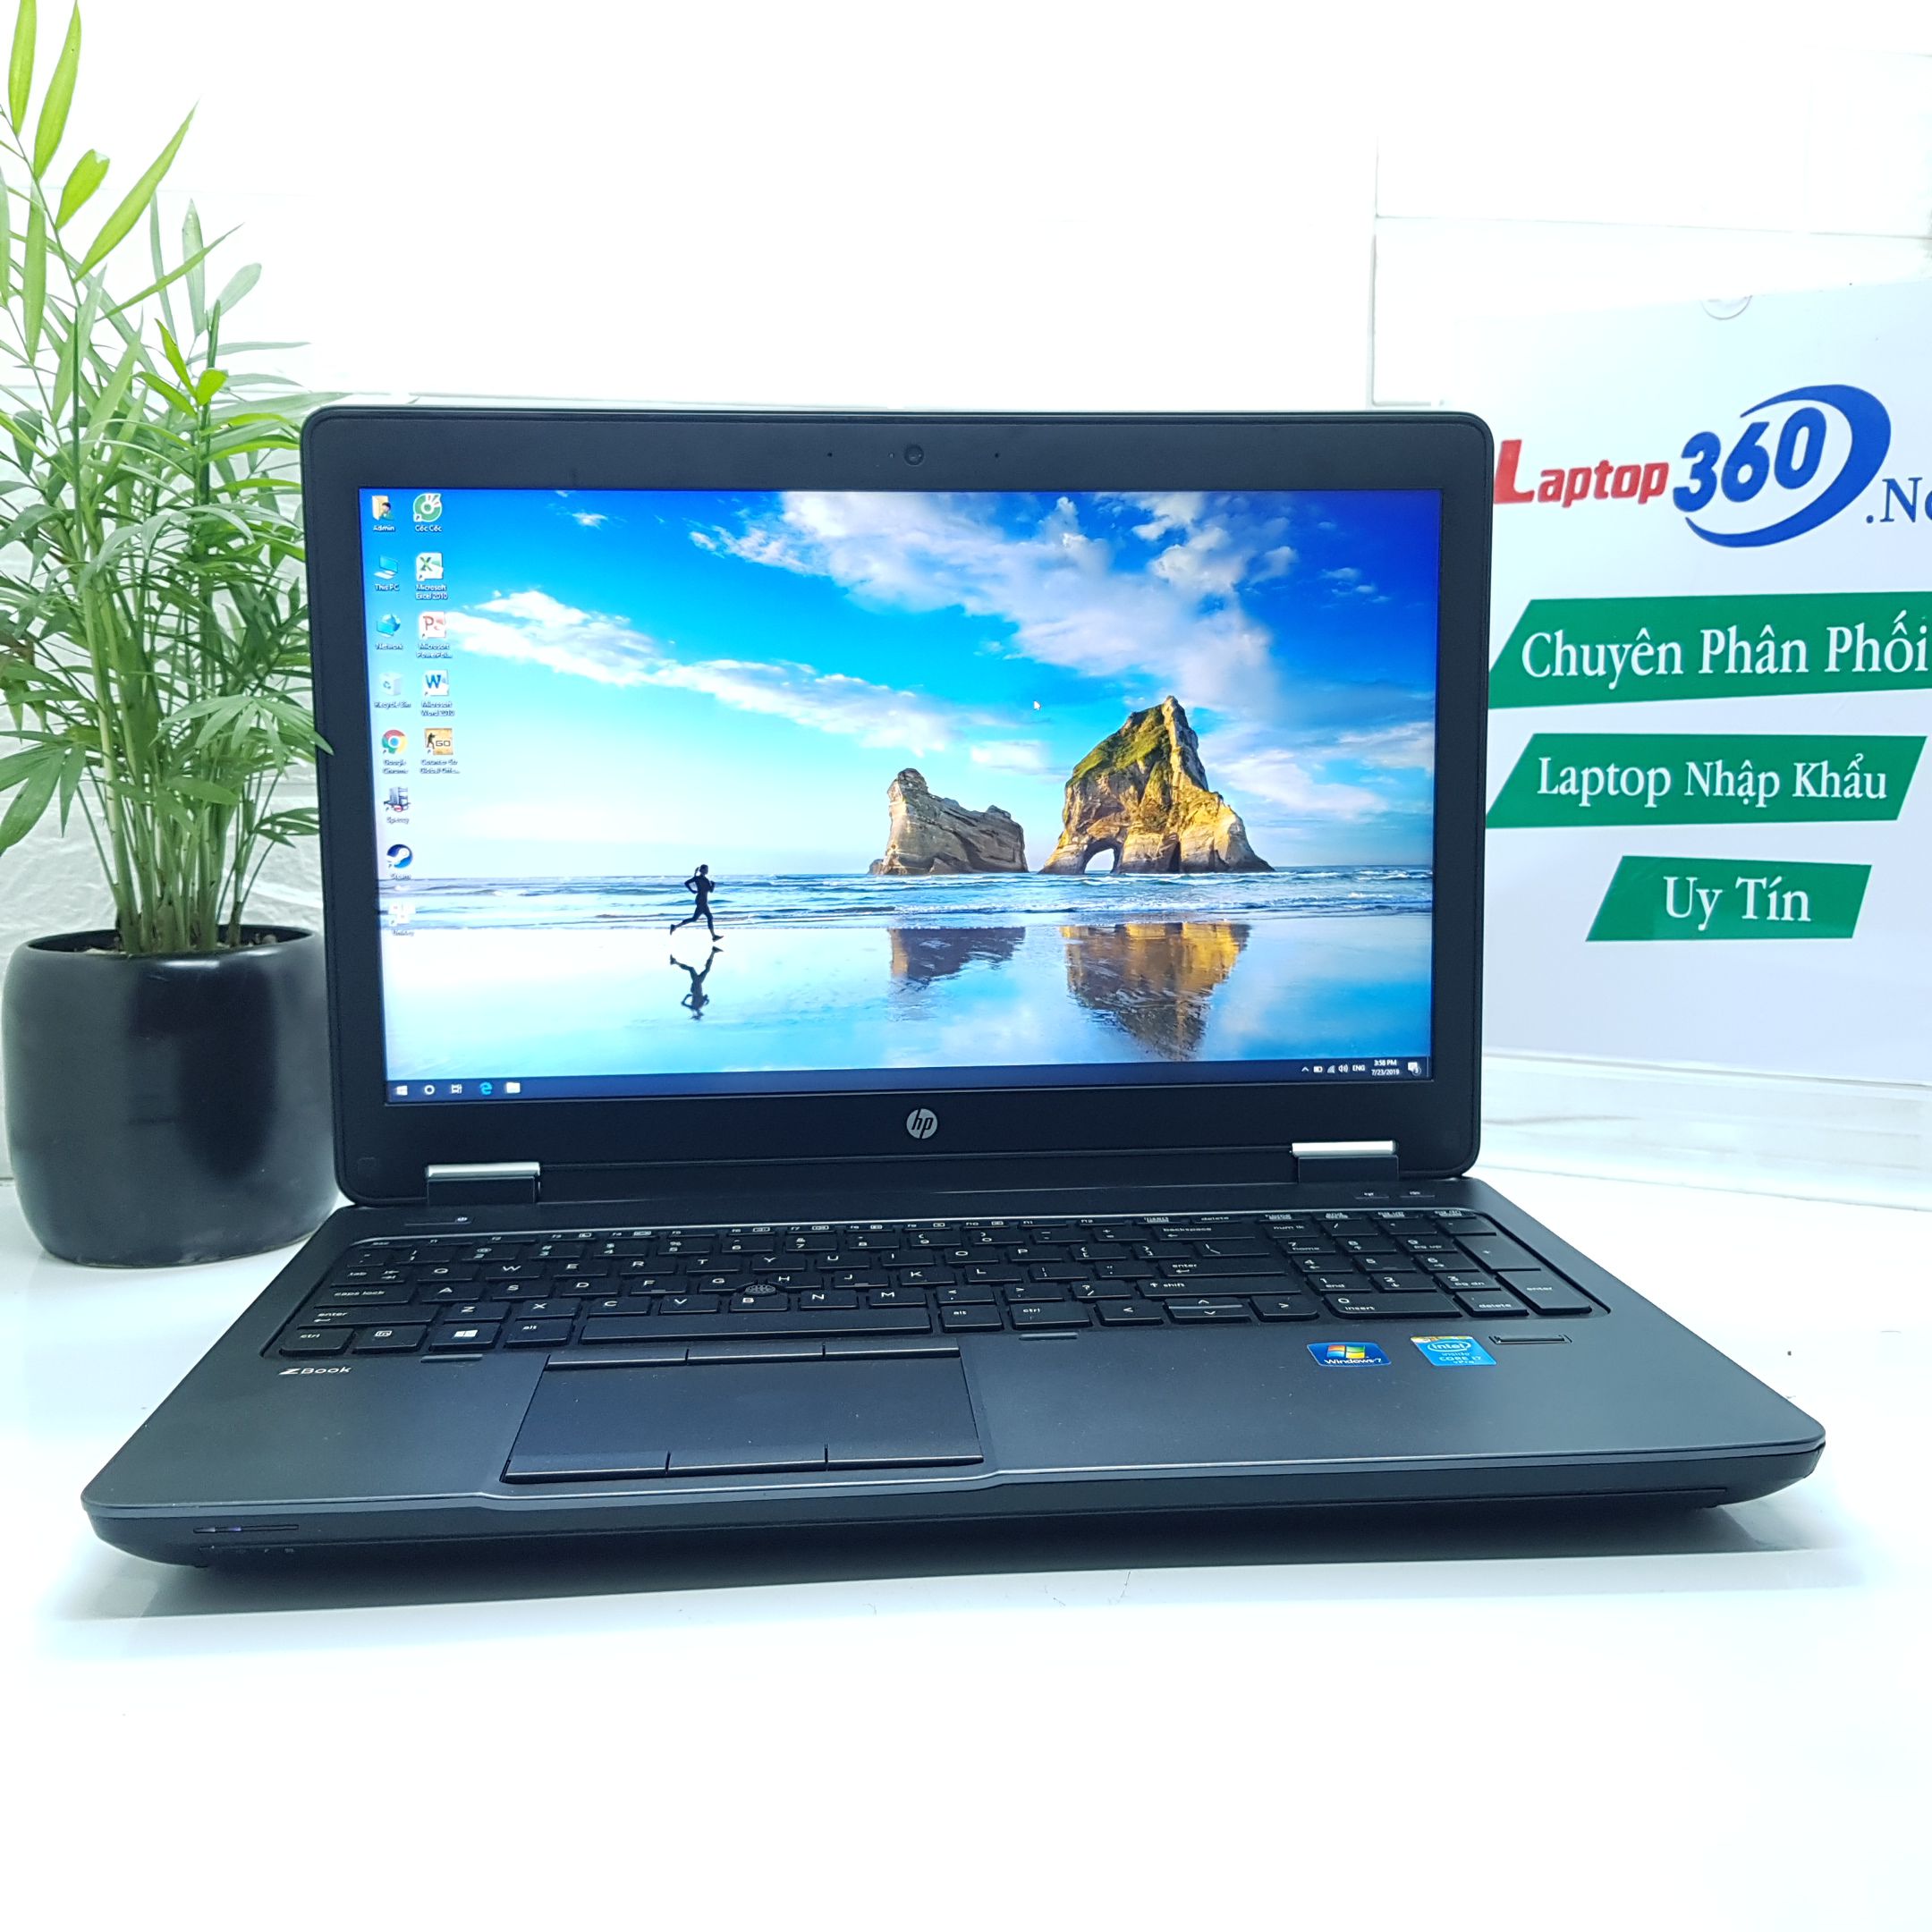 zbook 15 - laptop360